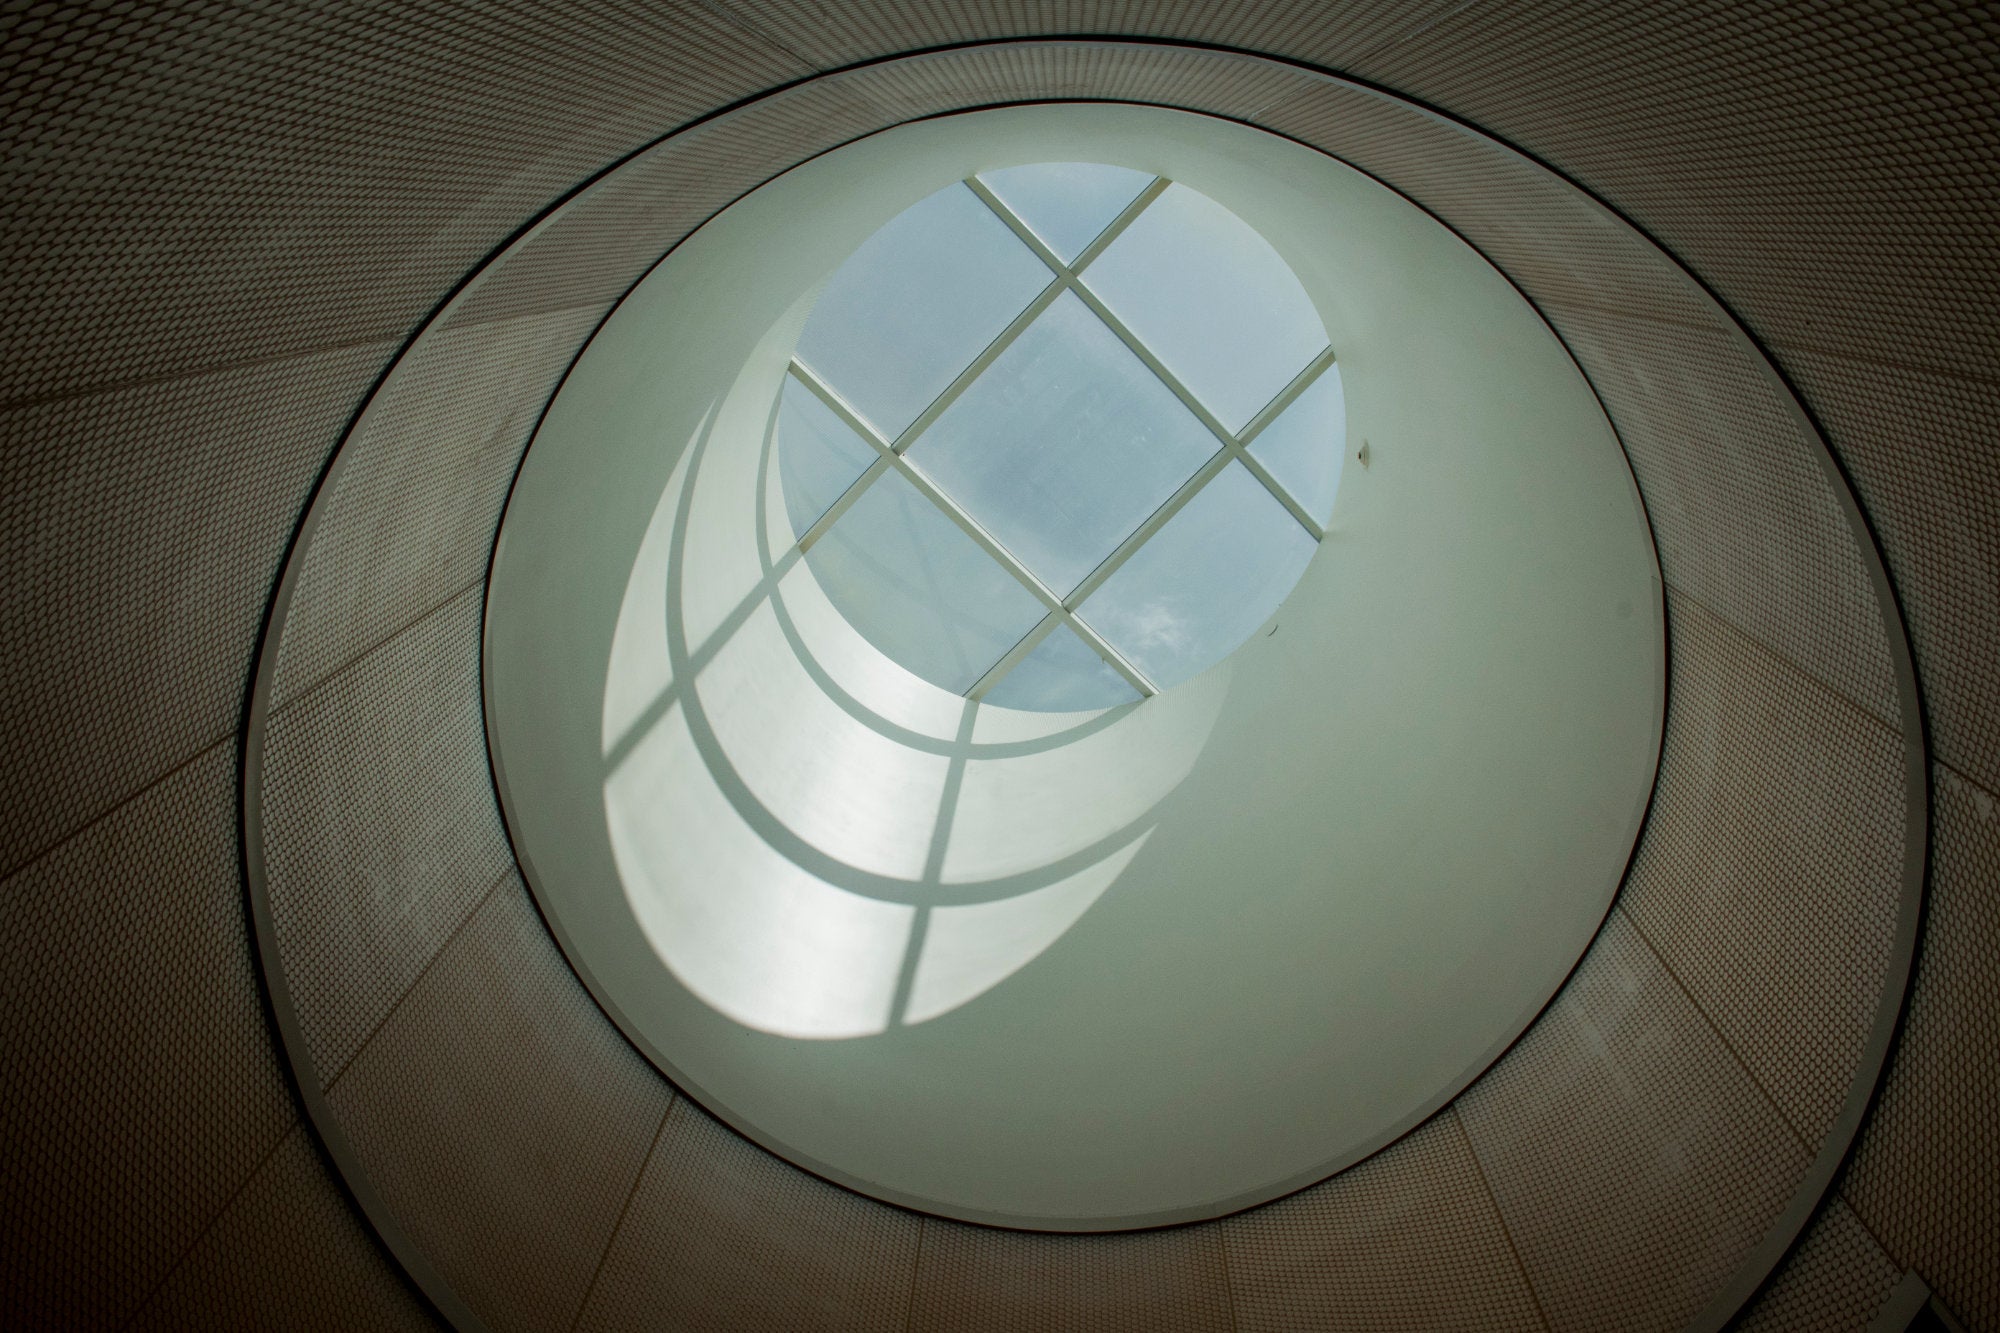 A distinctive oculus allows natural light to enter the building.